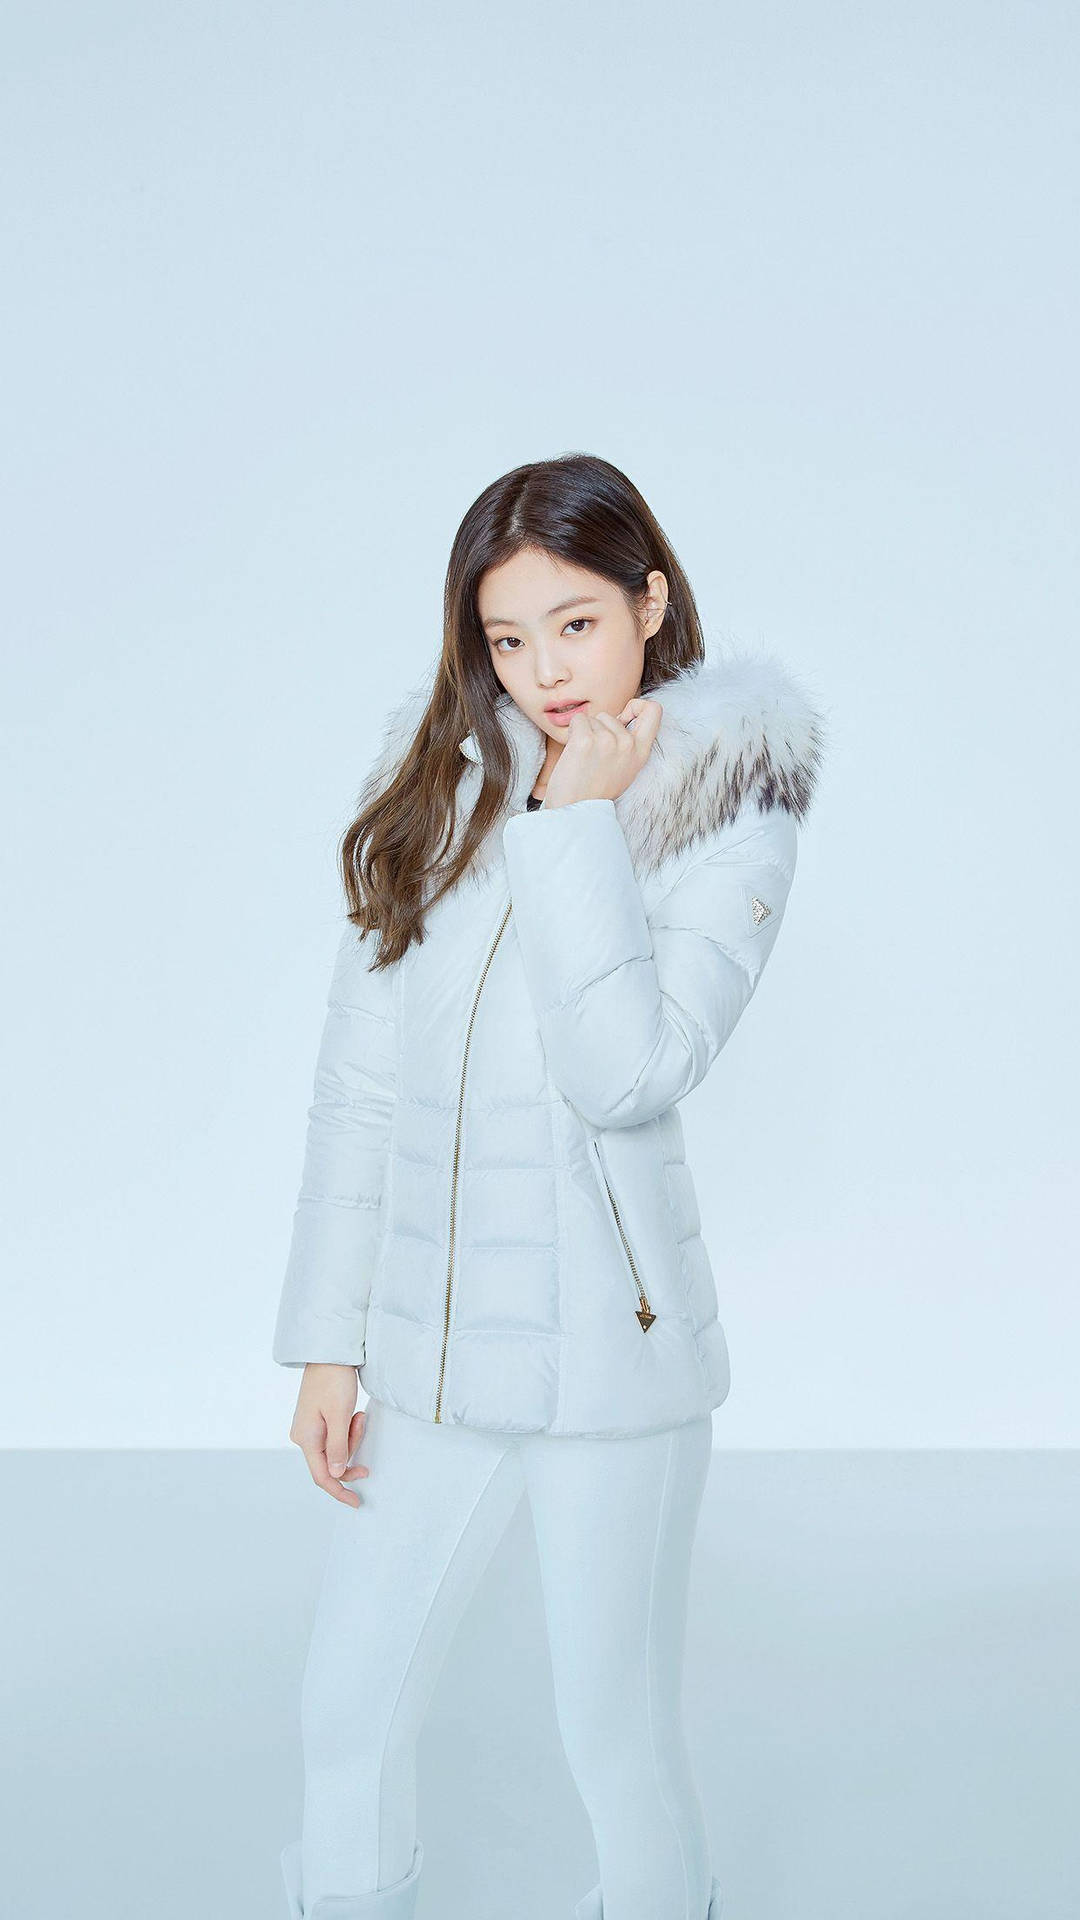 Jennie In White Winter Clothes Background